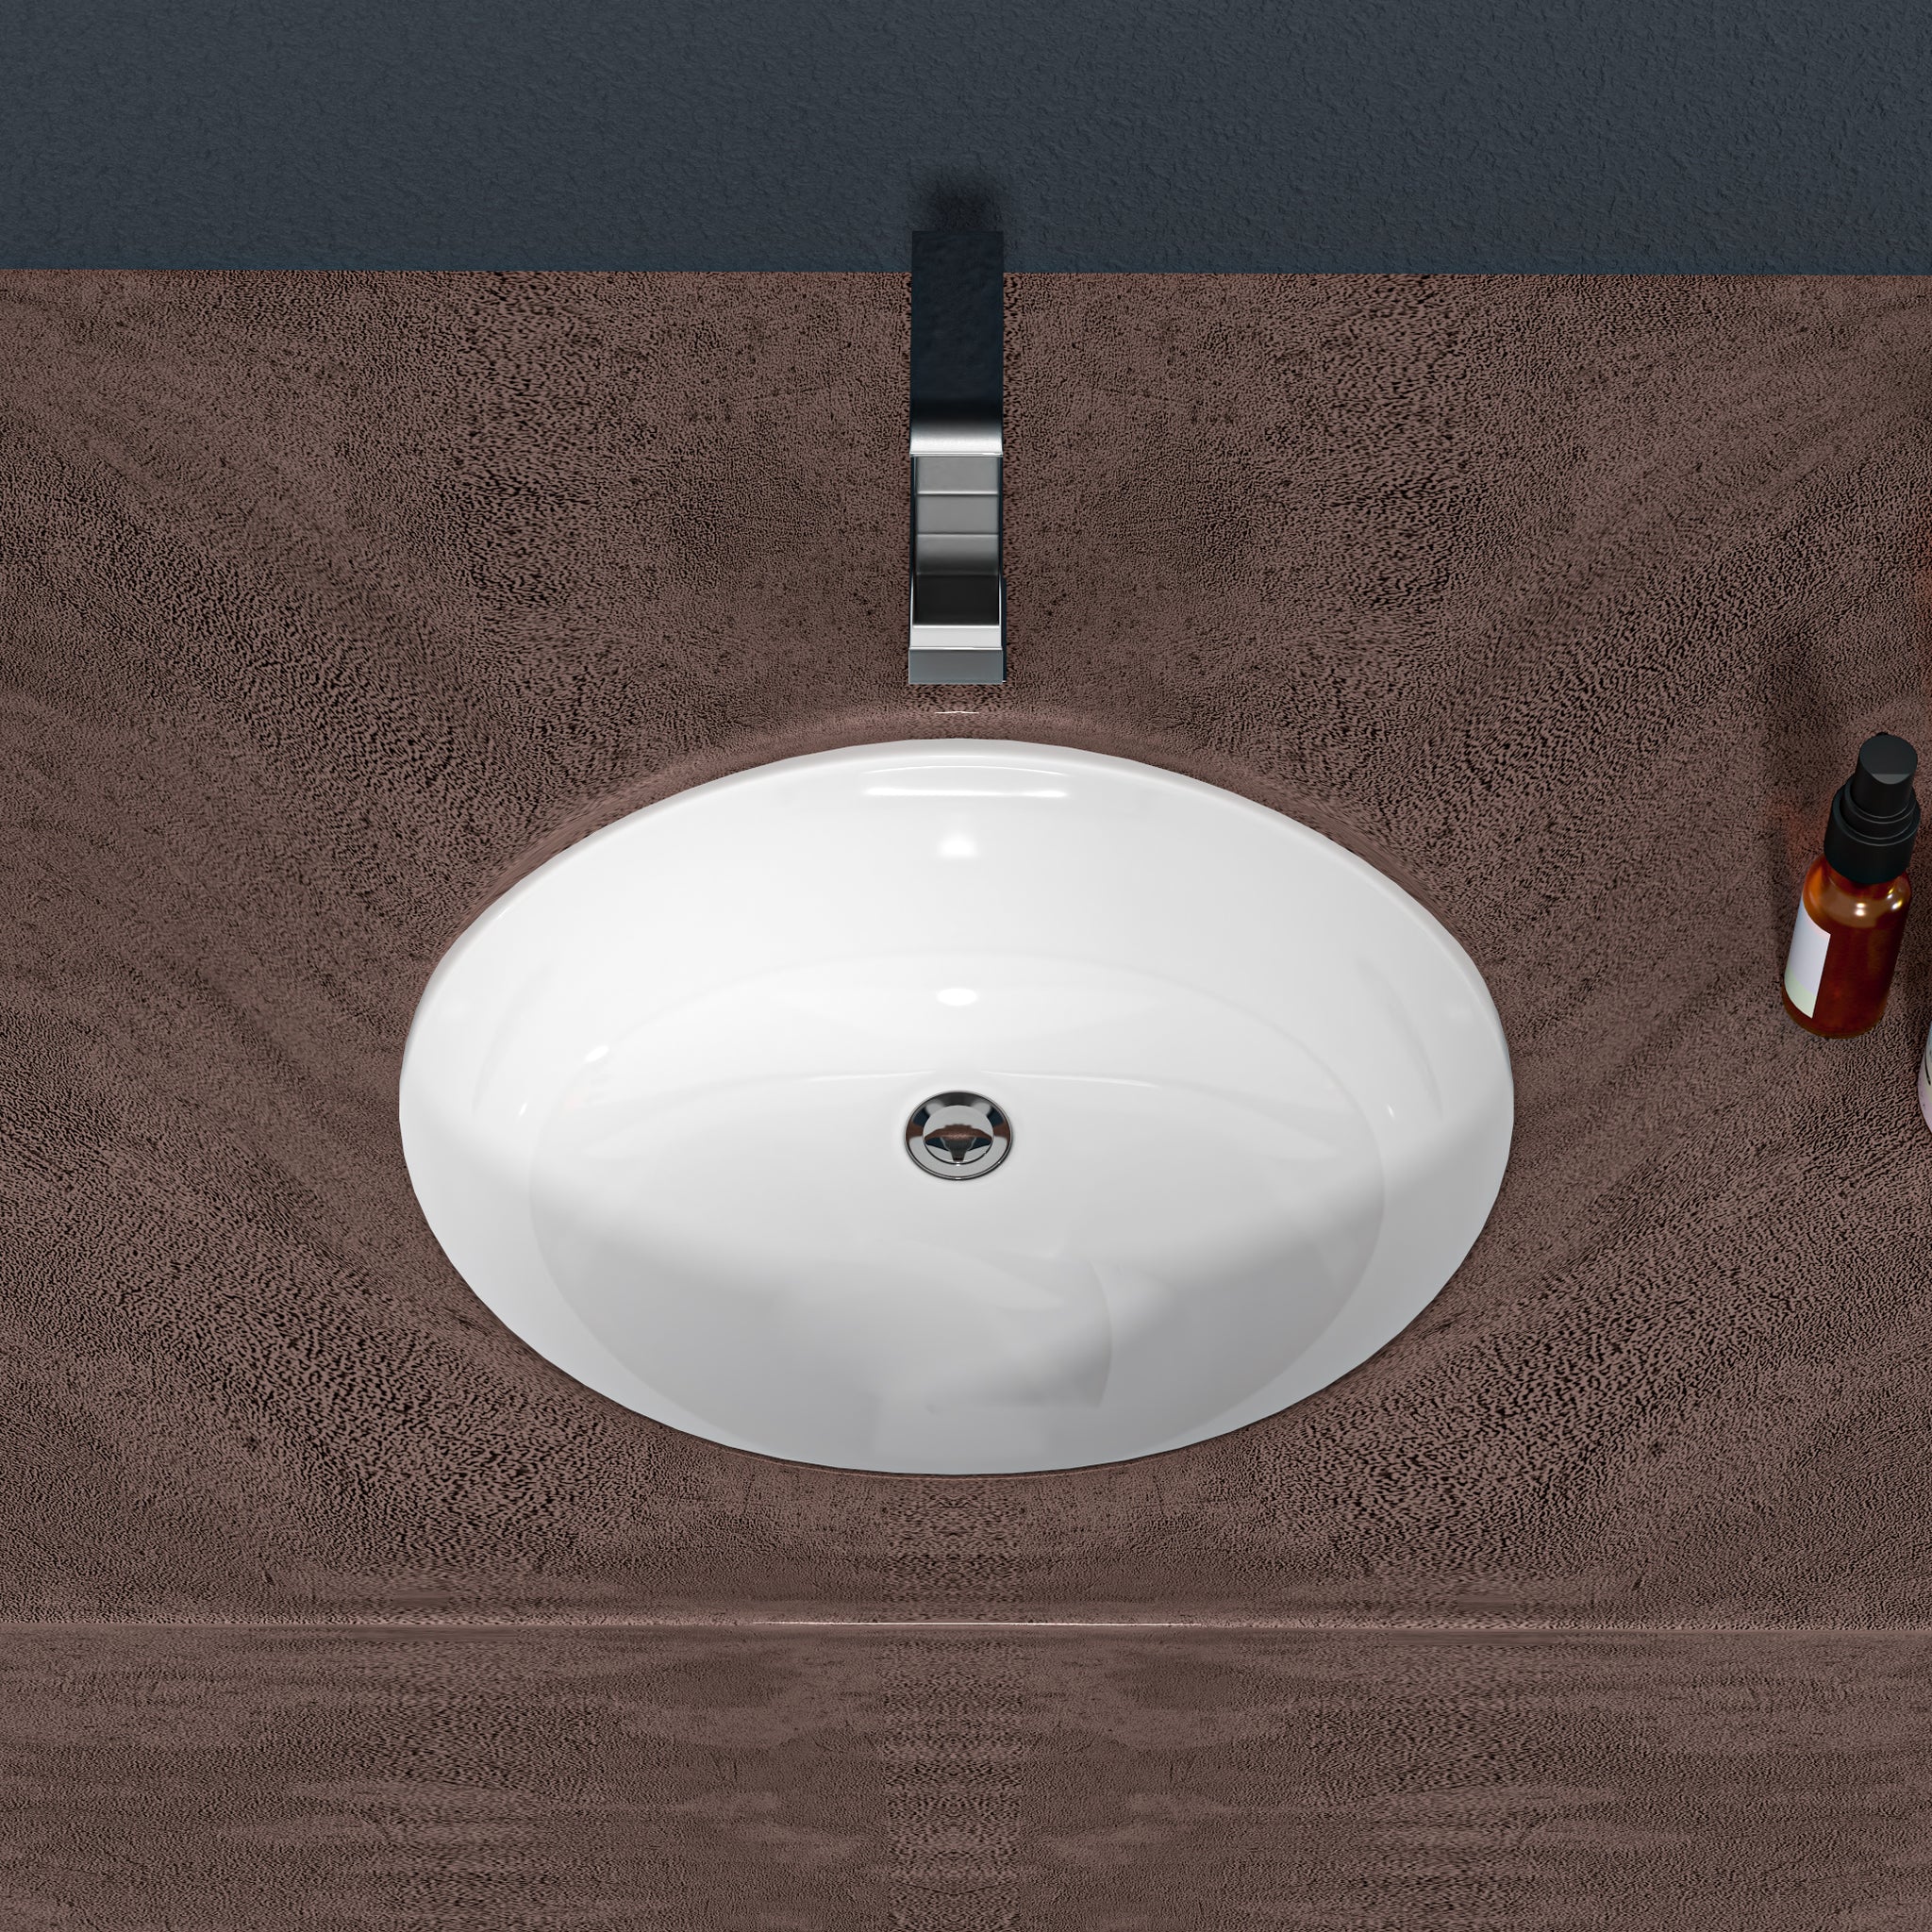 19"x16" White Ceramic Oval Undermount Bathroom Sink white-ceramic